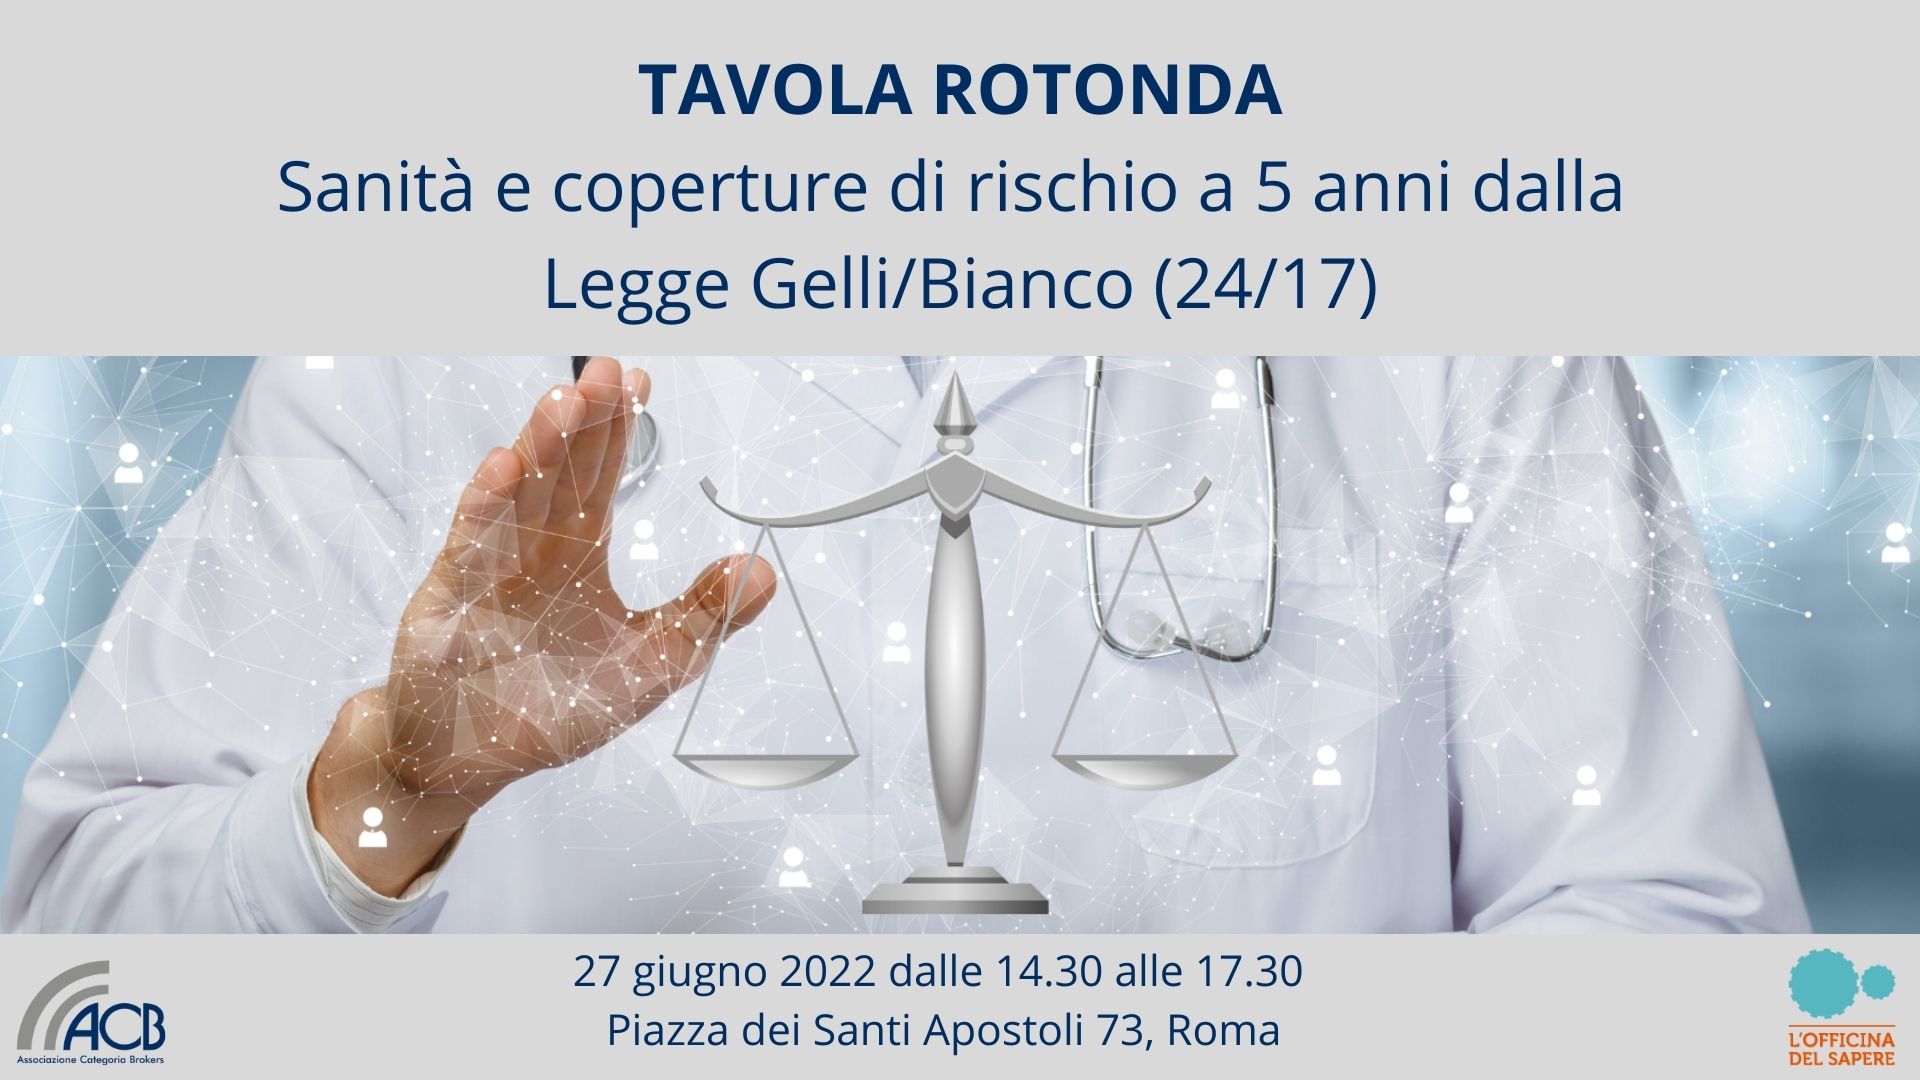 TAVOLA ROTONDA ACB 27 GIUGNO 2022 ROMA